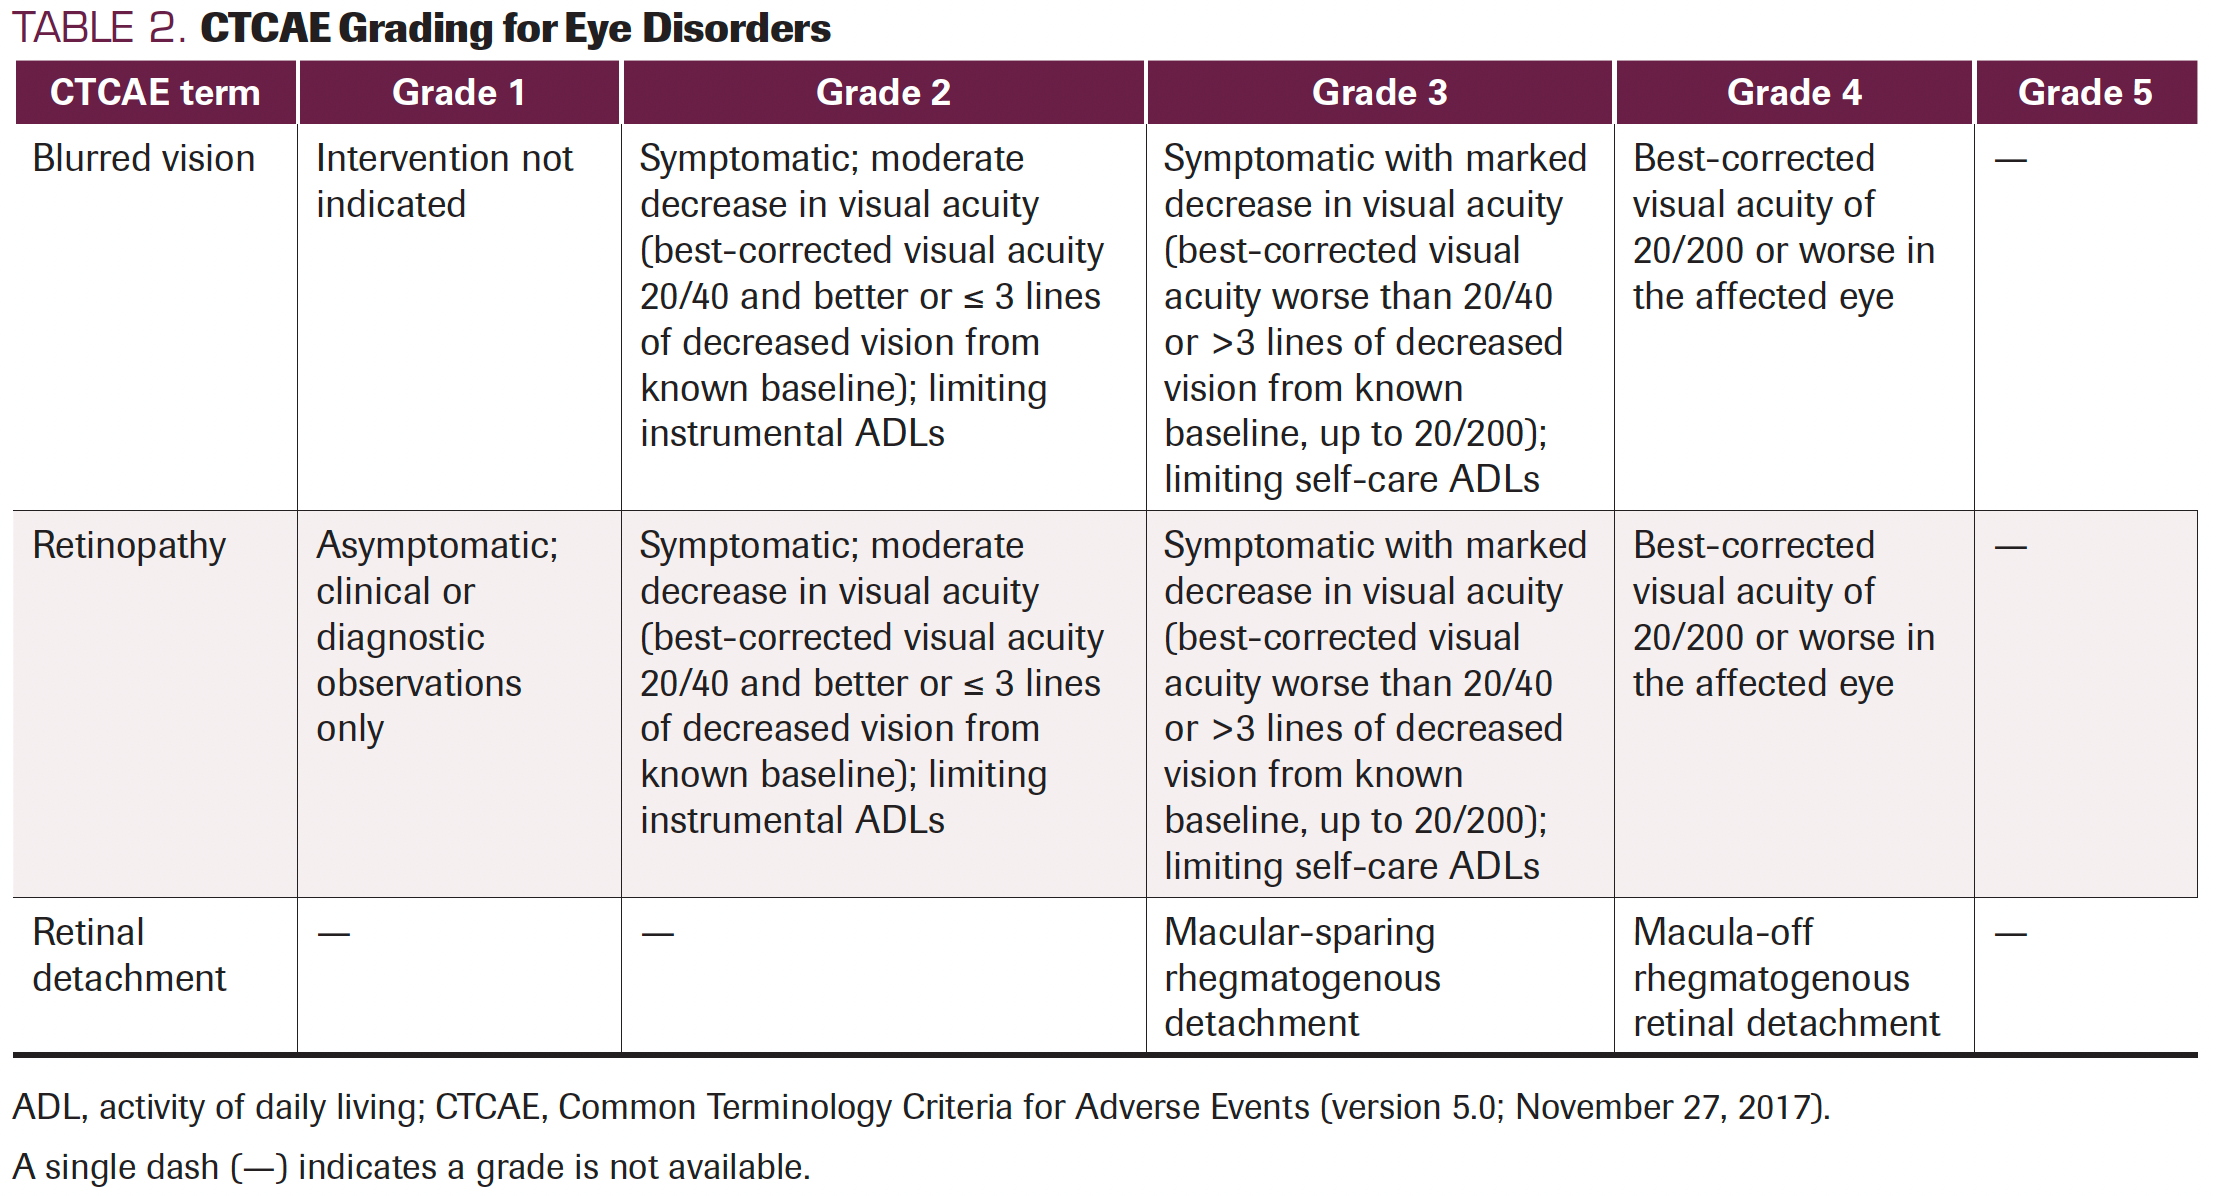 TABLE 2. CTCAE Grading for Eye Disorders